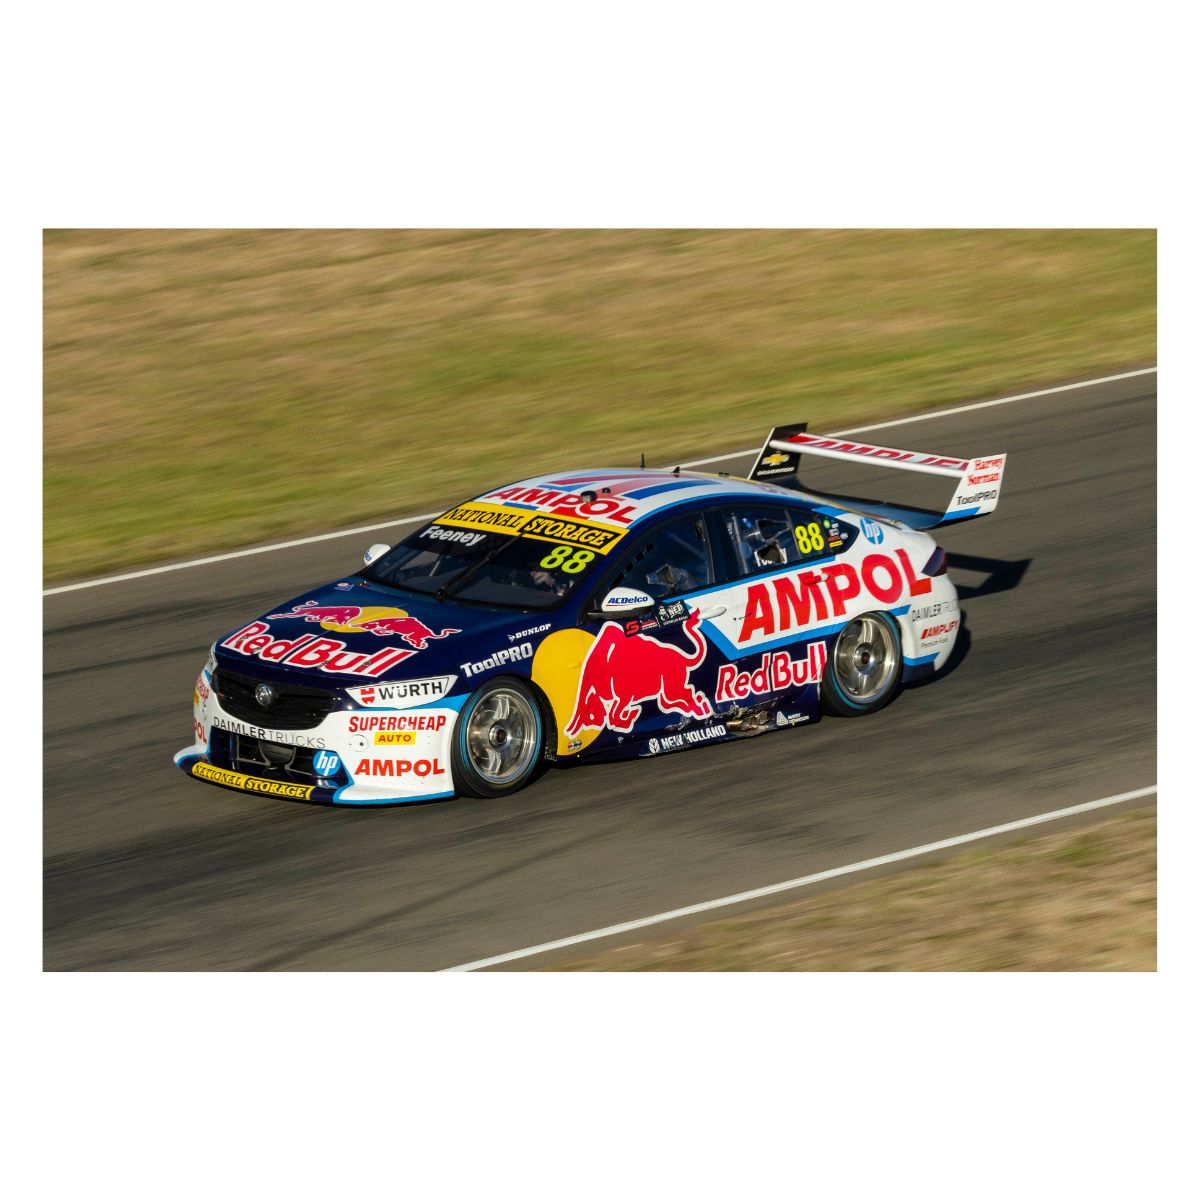 Holden ZB Commodore - Red Bull Ampol Racing - Broc Feeney #88 - Ned Whisky Tasmania Supersprint Race 4 Runner-Up